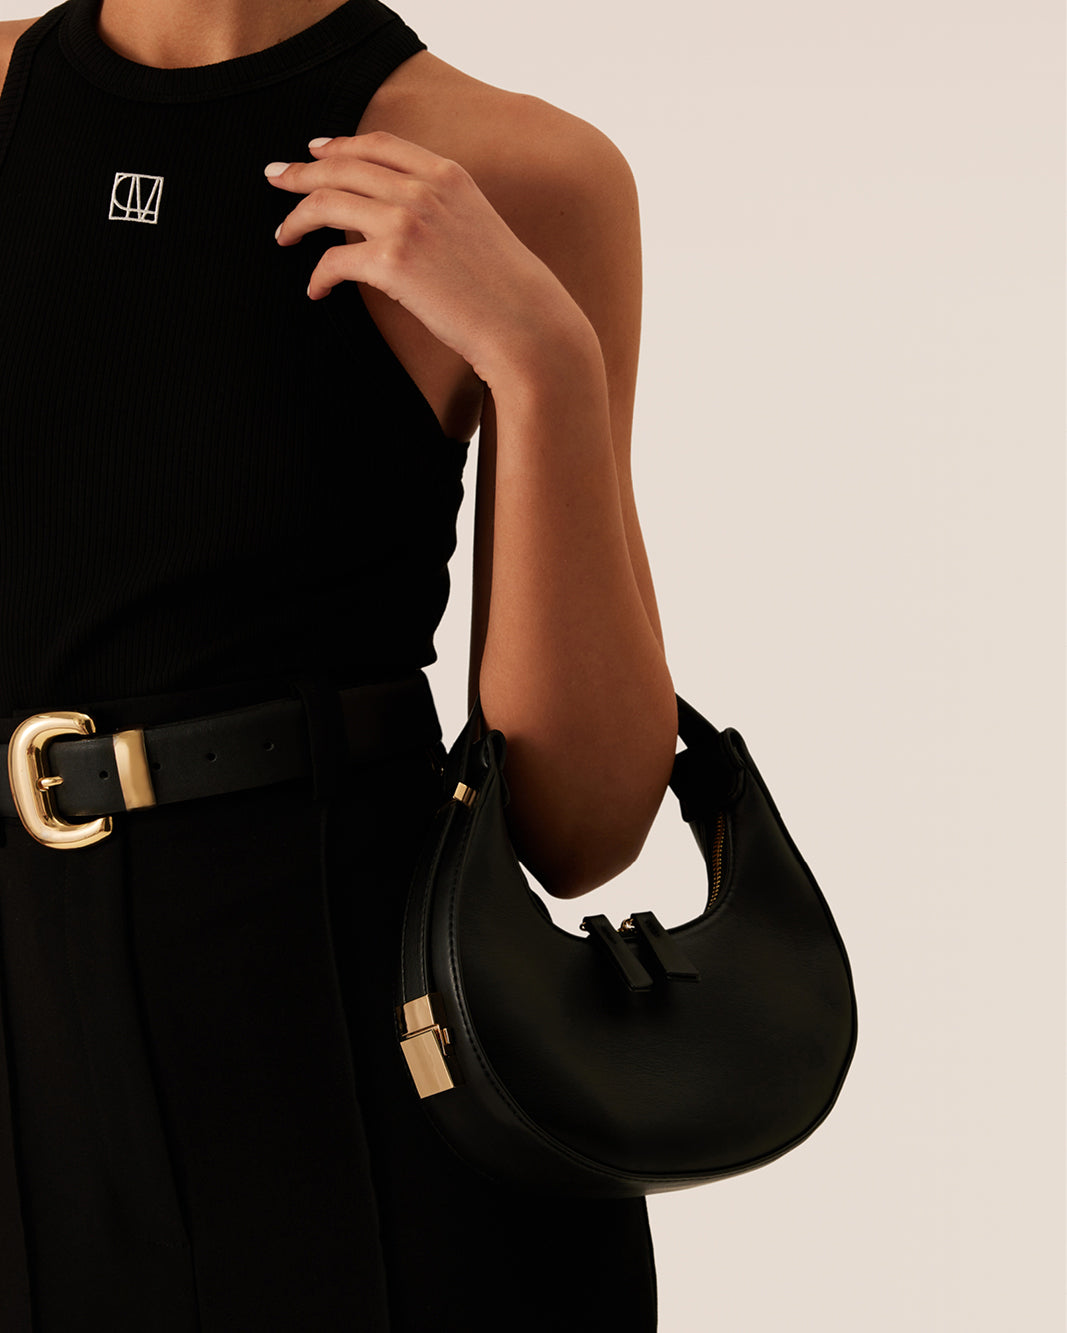 SOFIA SHOULDER BAG - BLACK-Handbags-Billini-O/S-Billini